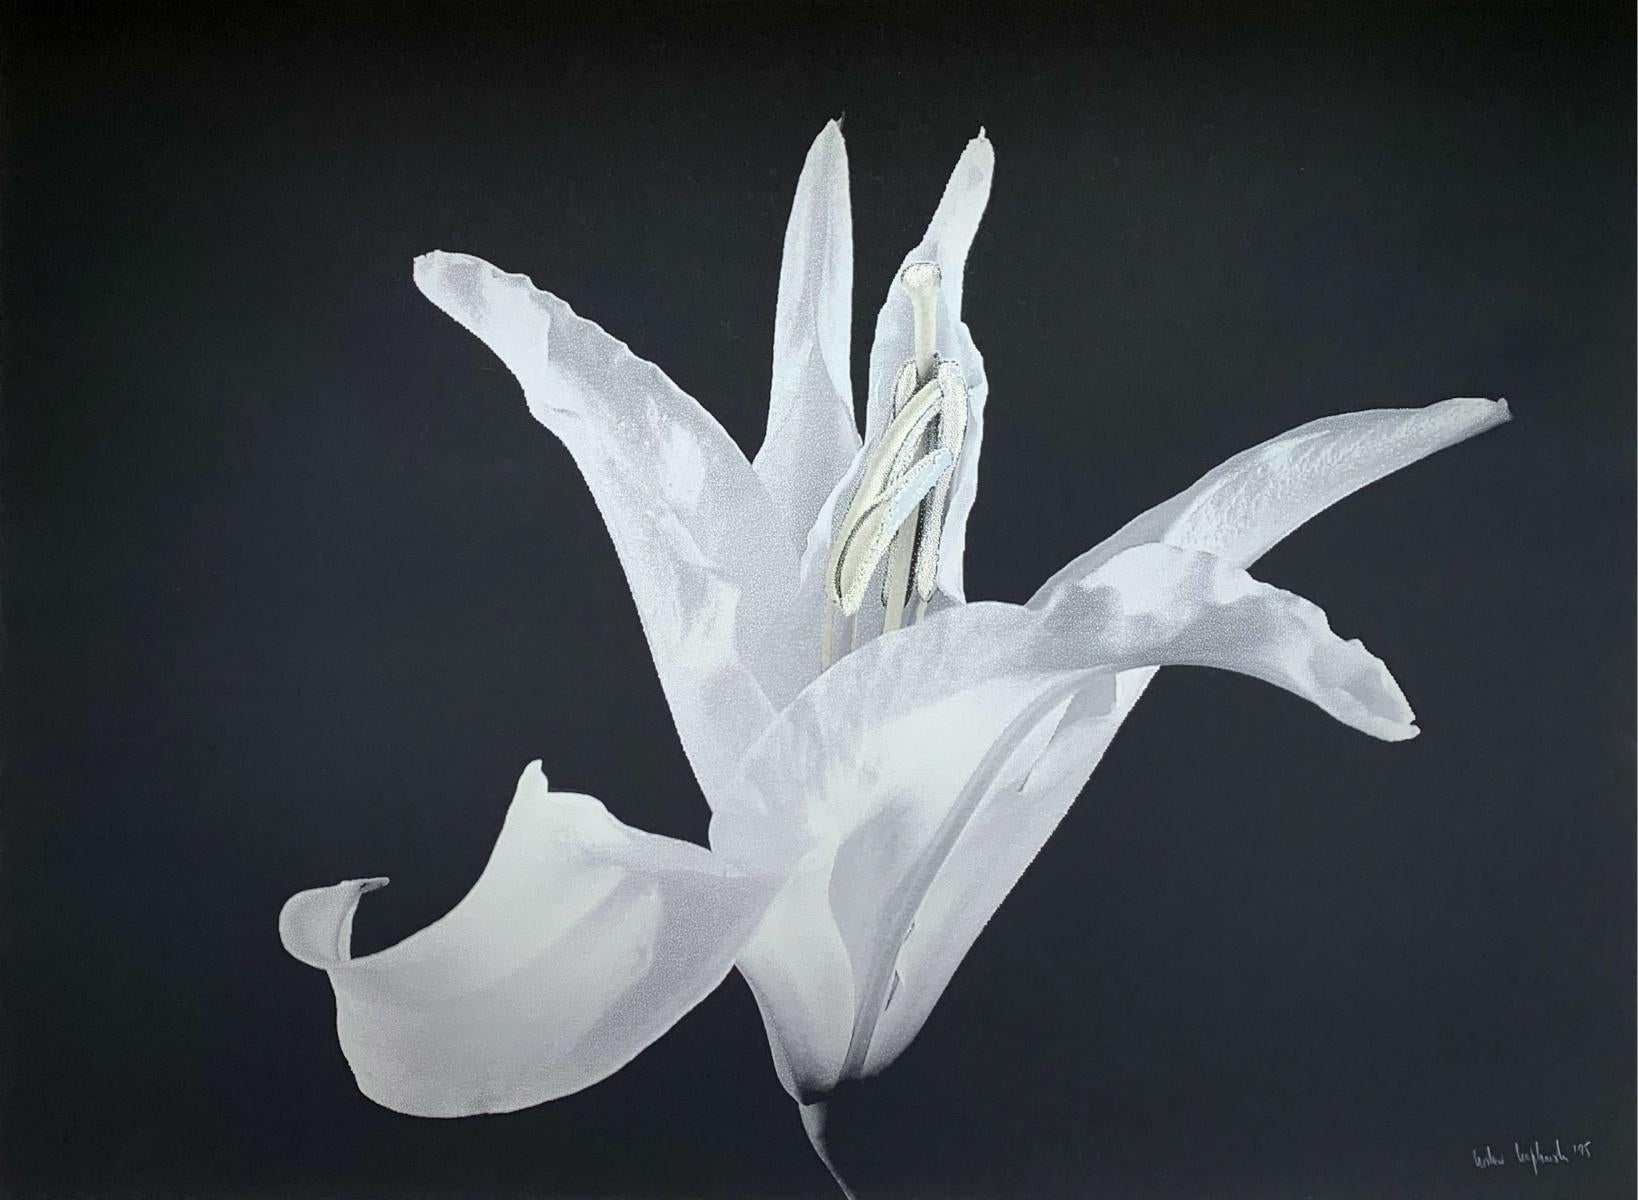 Czeslaw Czaplinski Black and White Photograph - A lily. Photo on matte paper, Still life, Floral, Black & White, Polish artist